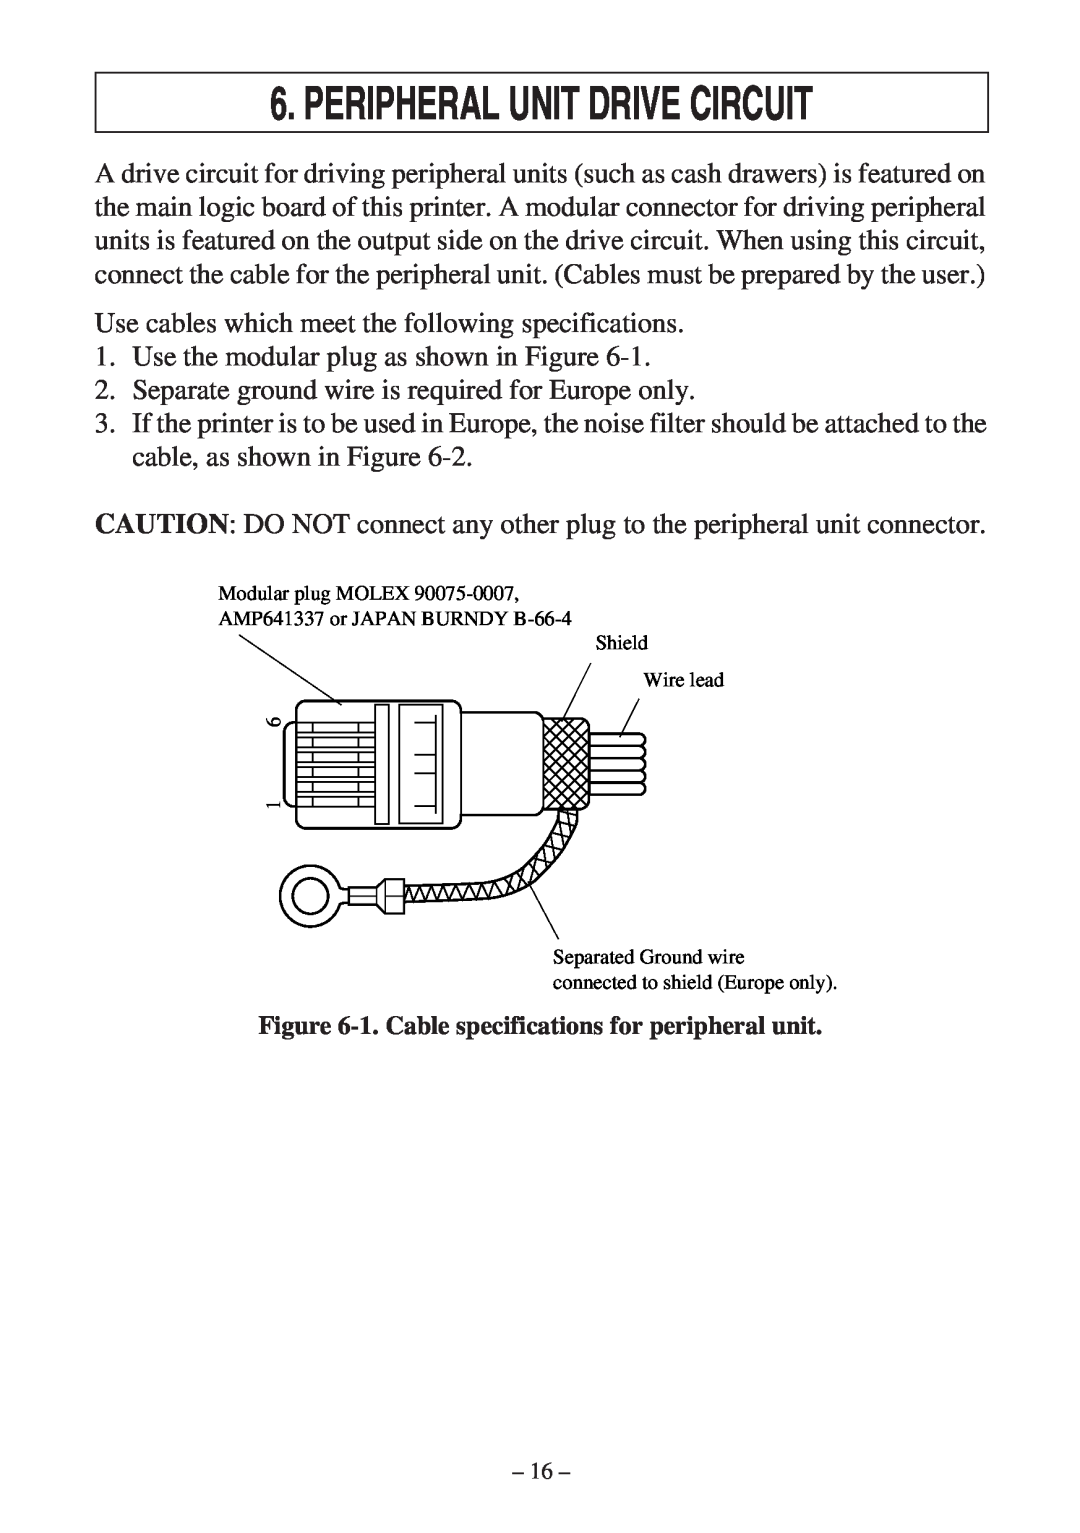 Star Micronics RS232 manual Peripheral Unit Drive Circuit 